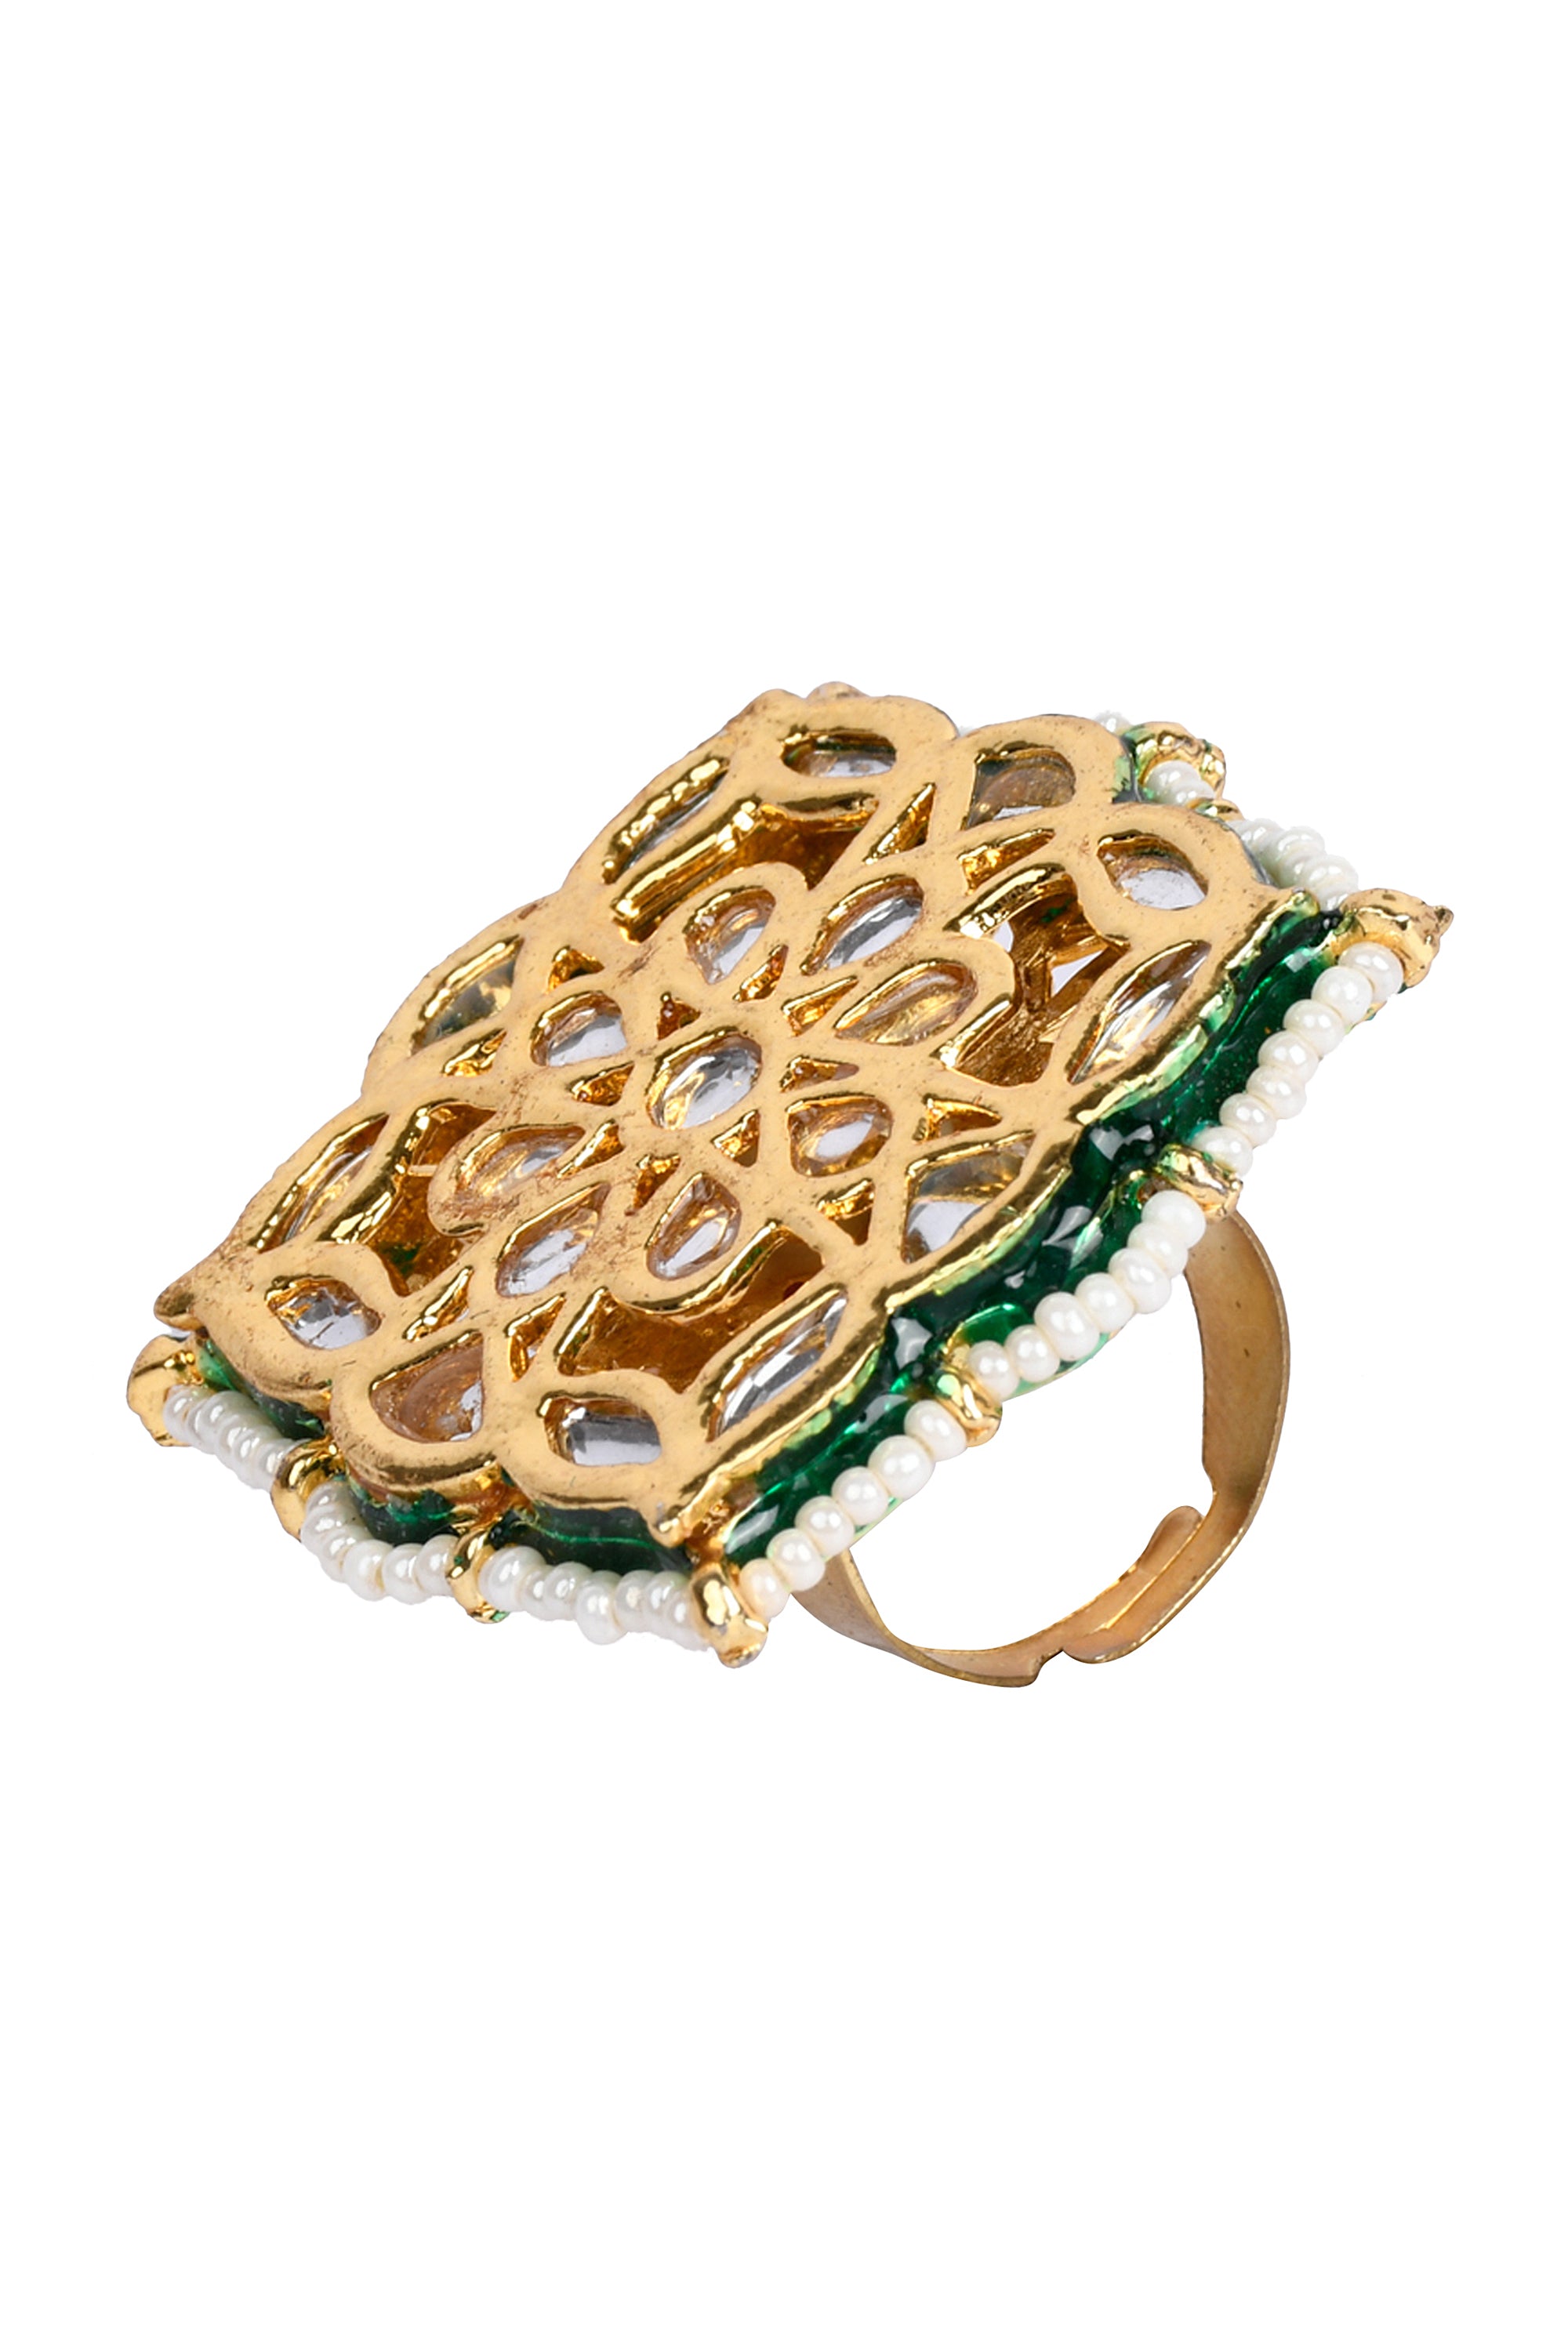 Women's Gold Tone Kundan Adjustable Ring With Pearls - Femizen